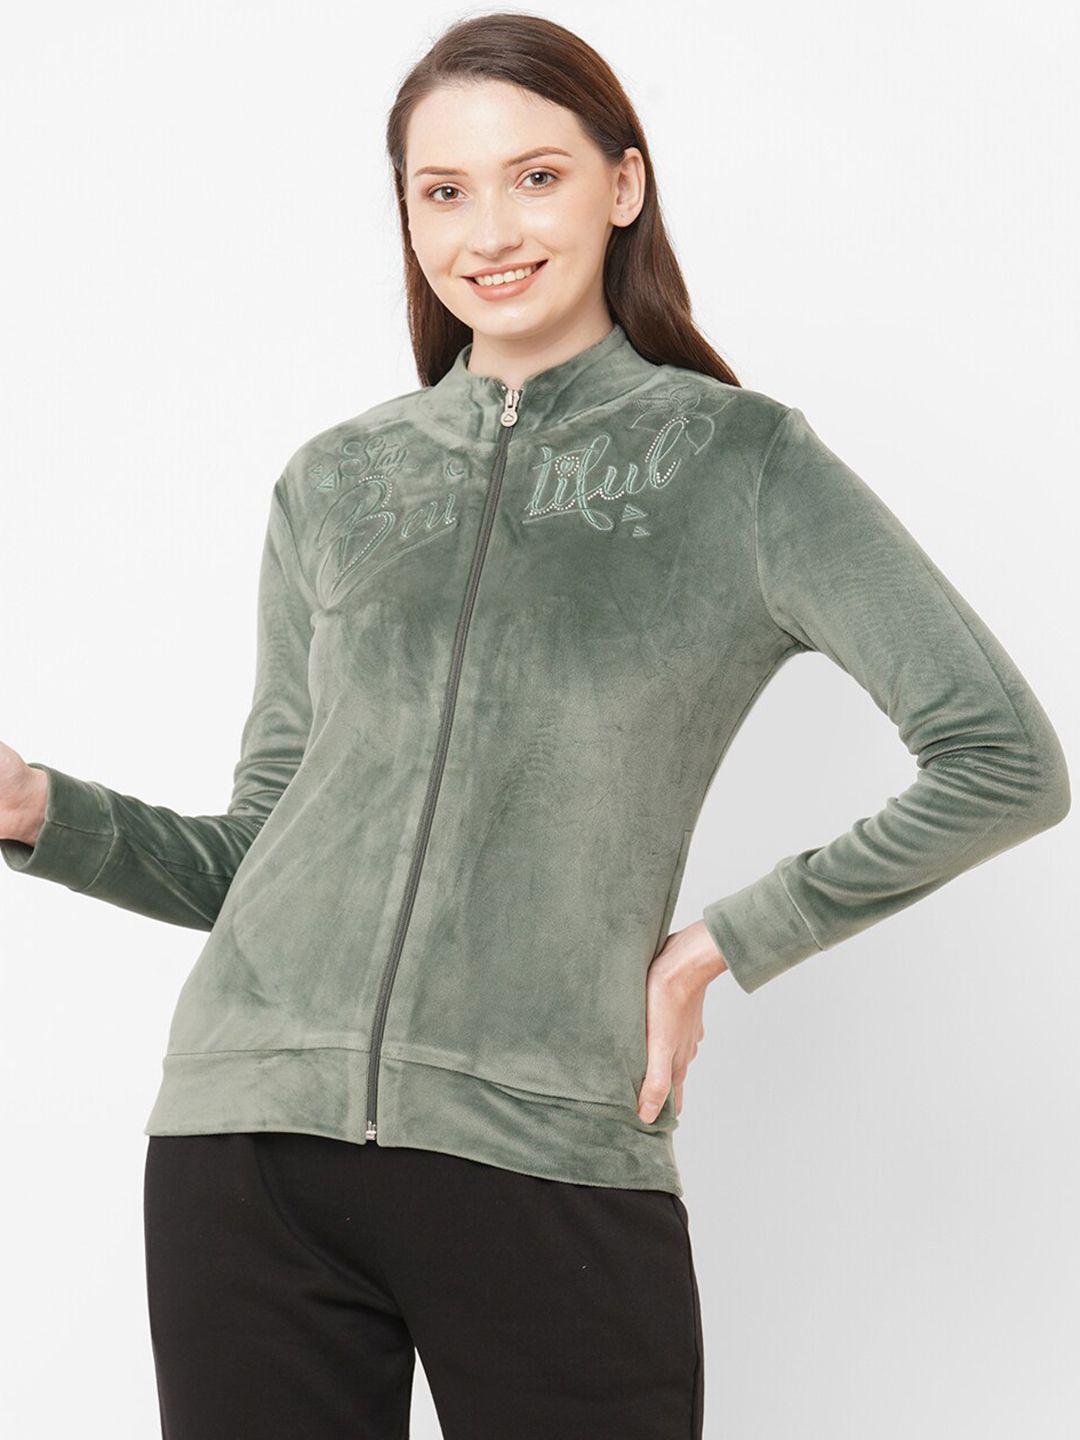 sdl by sweet dreams women ivy green typography embroidered fleece sweatshirt